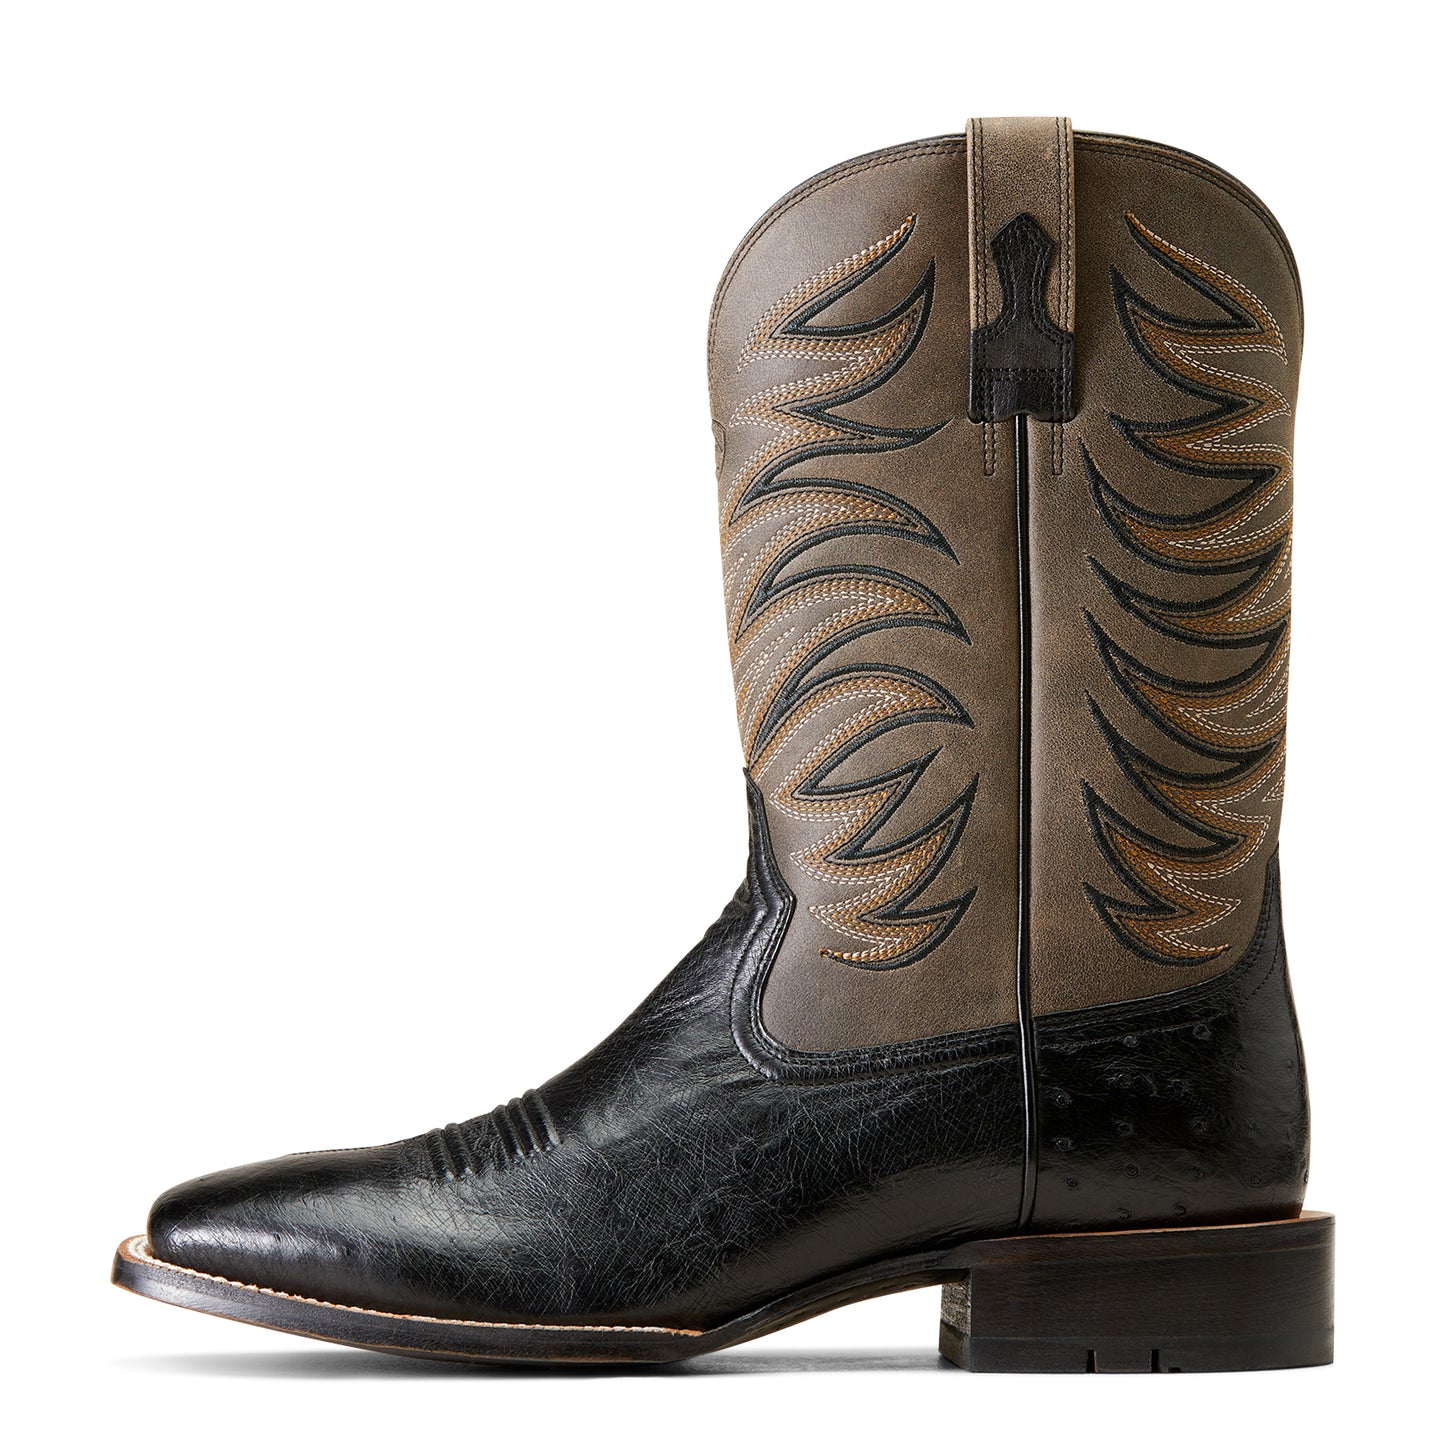 Ariat Men's Badlands Cowboy Boot